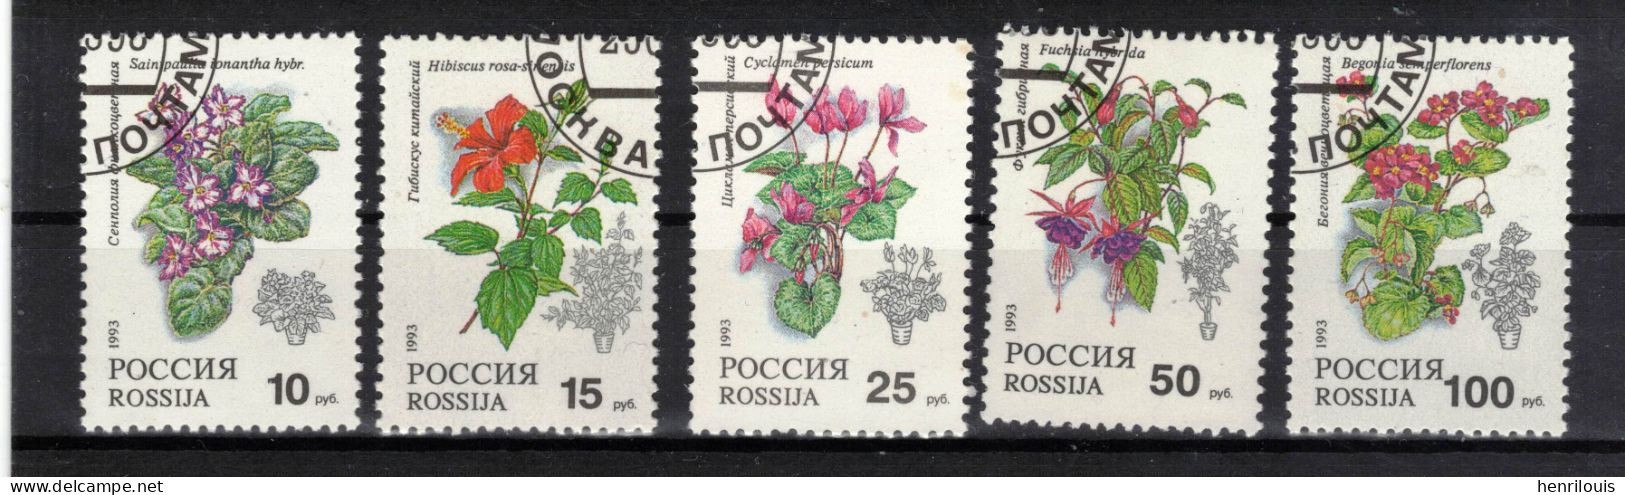 Russie   Timbres  De 1993  ( Ref 1332 H)  Flore - Fleurs - Gebraucht